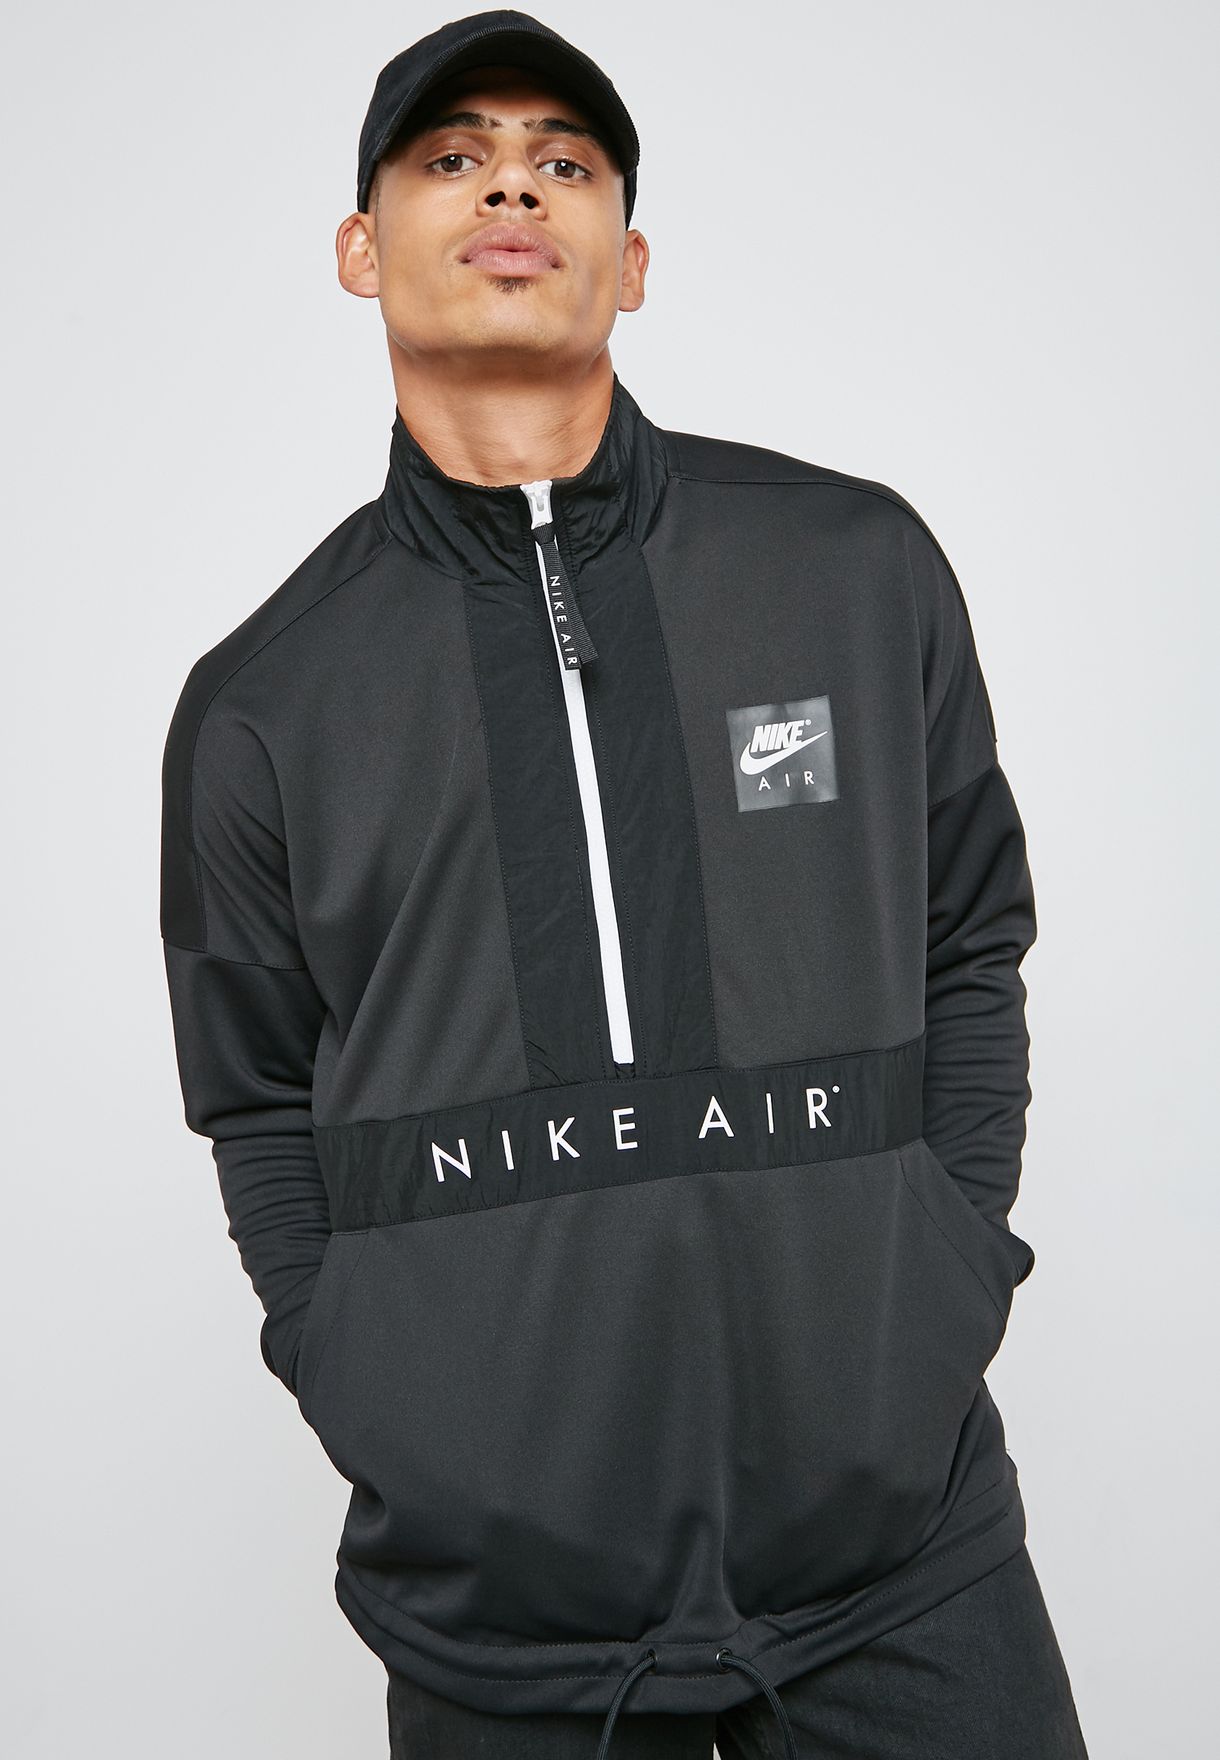 Shopping \u003e nike air jacket black, Up to 